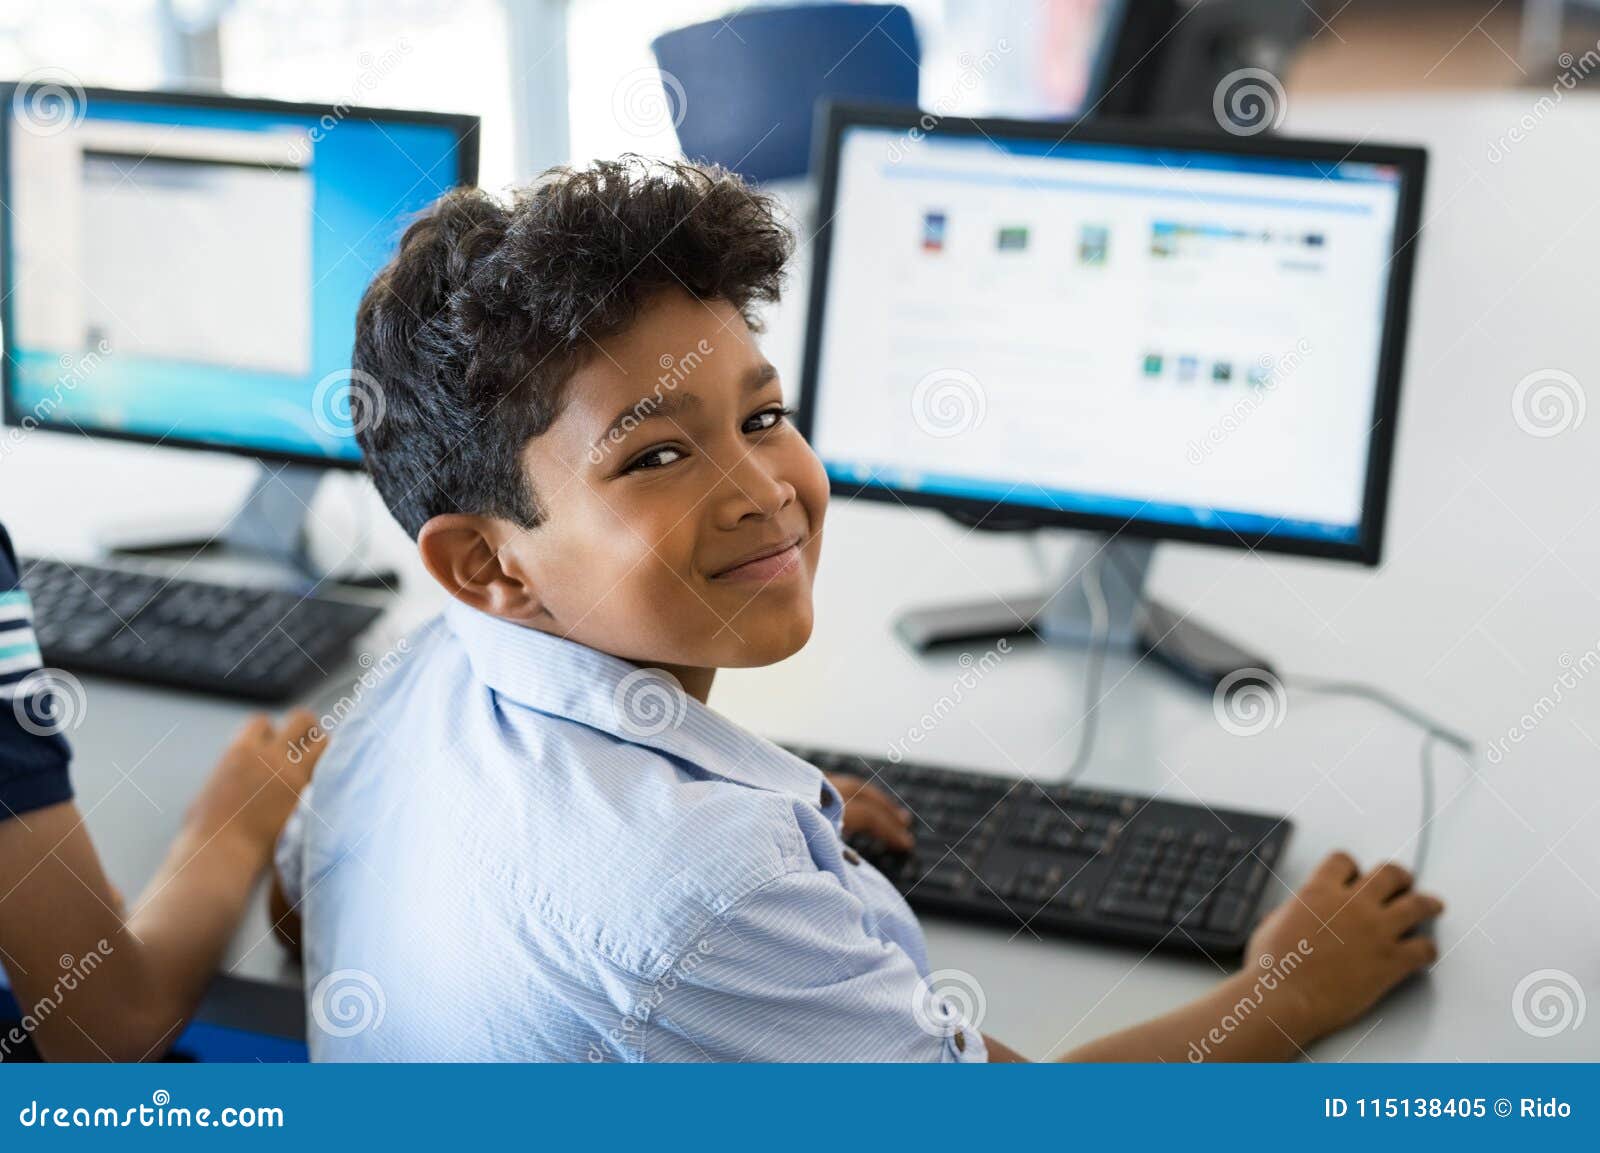 school boy using computer